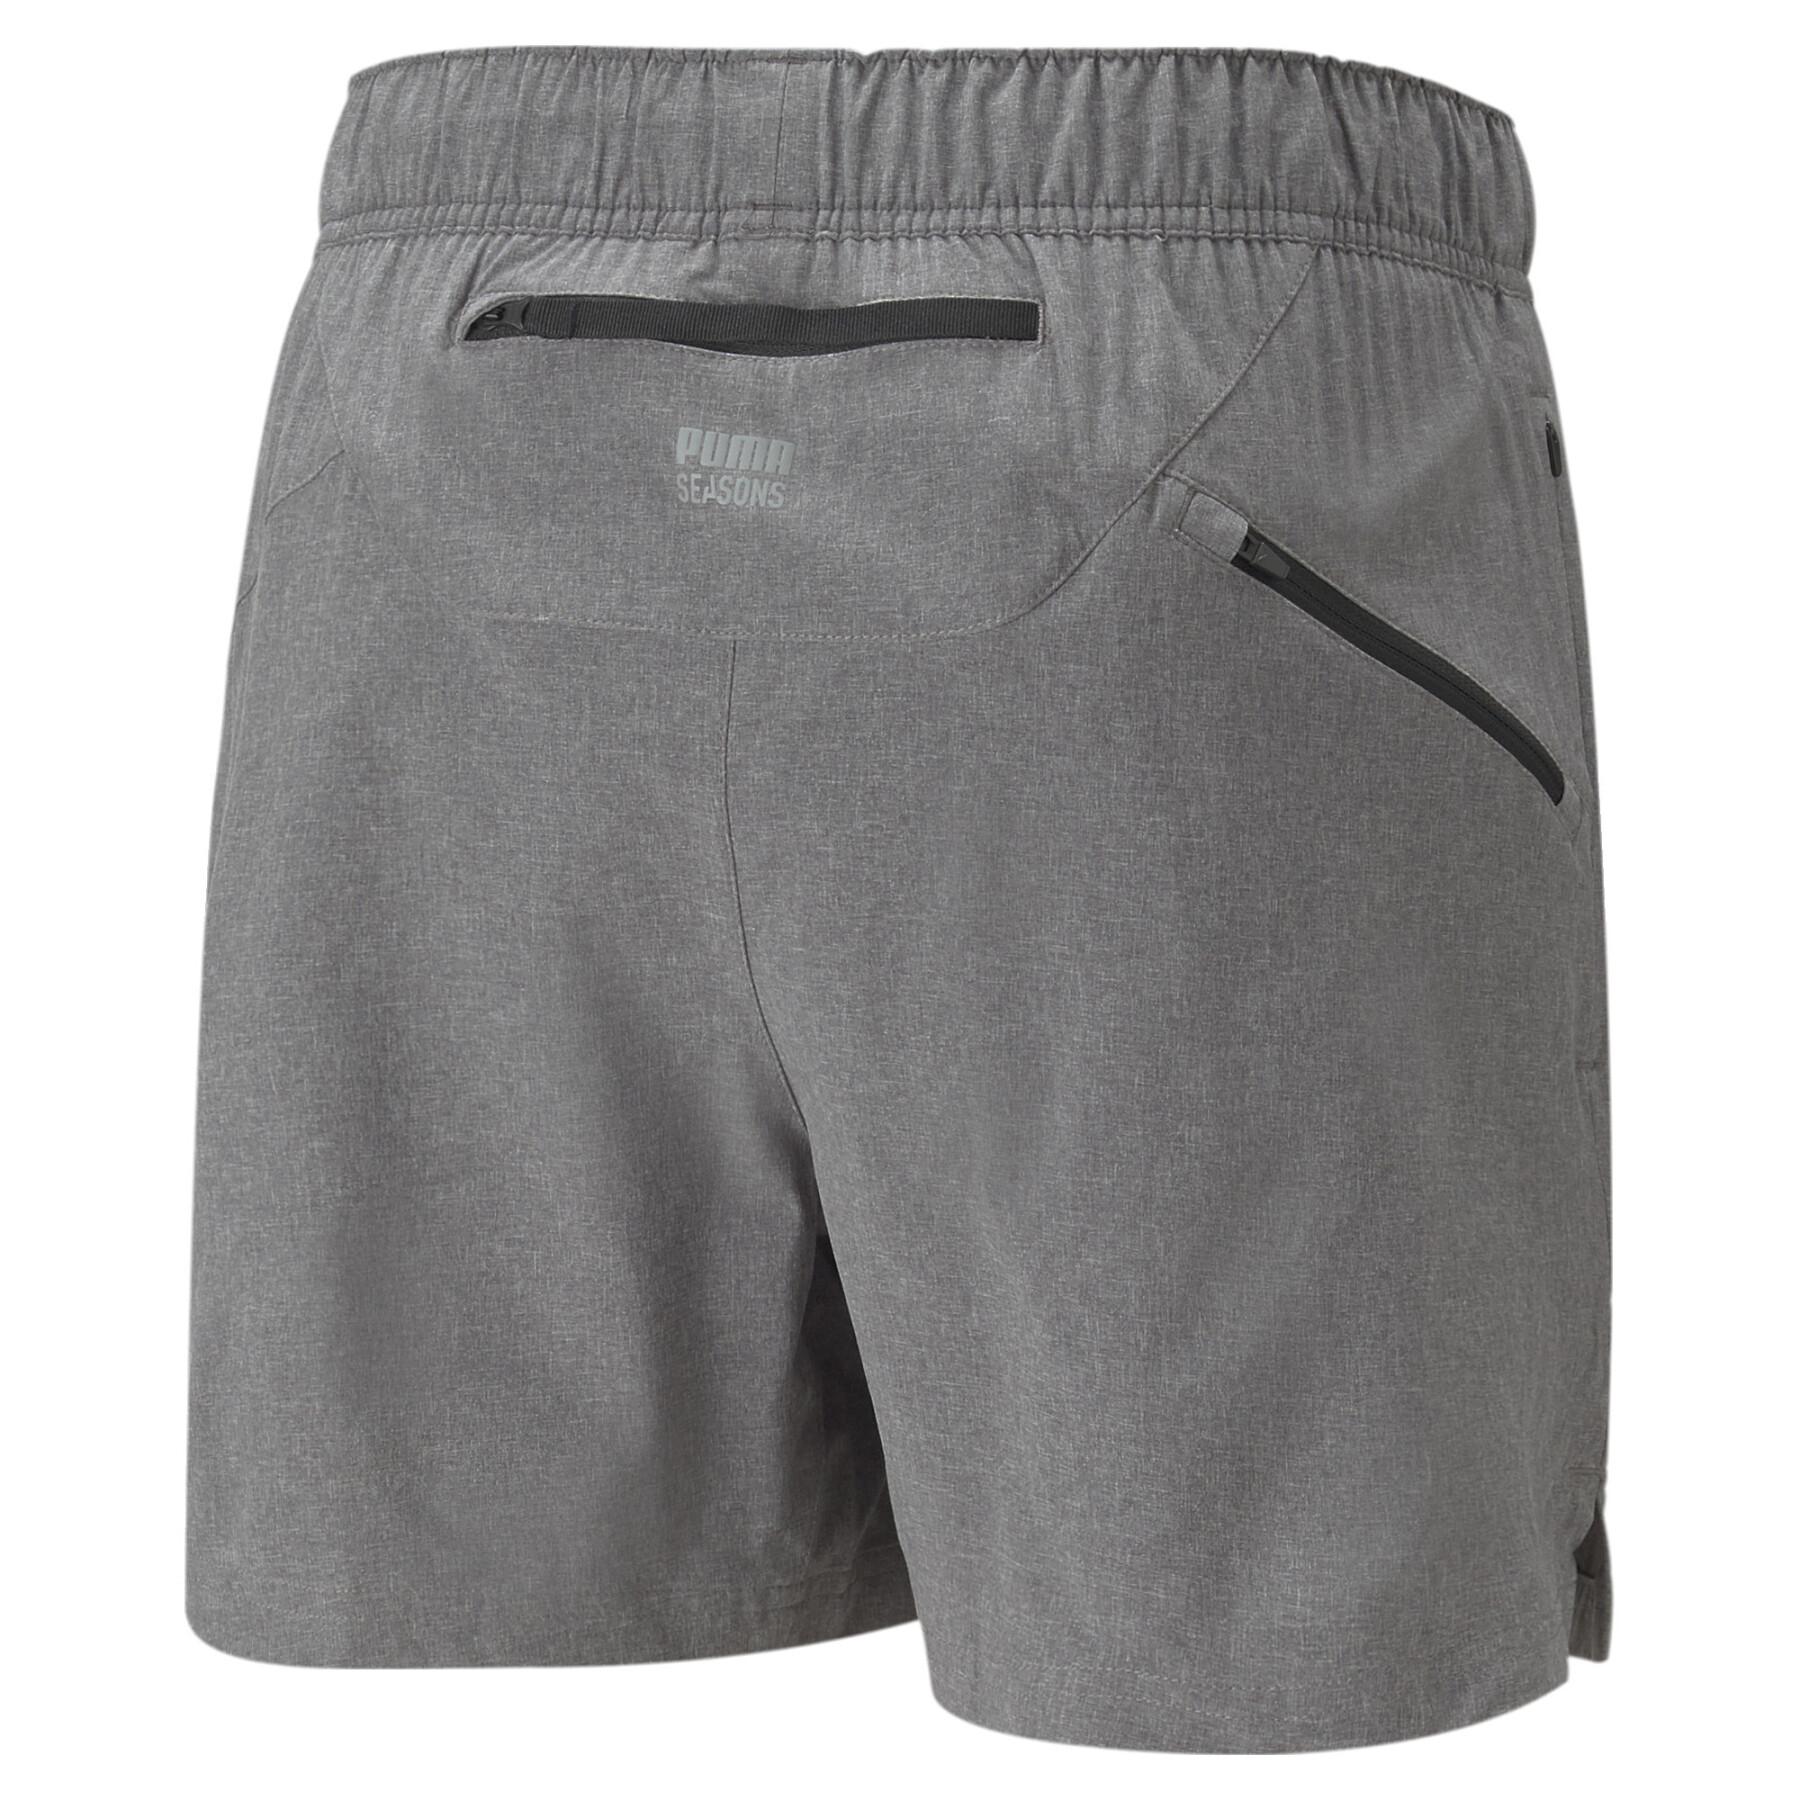 Lightweight woven shorts Puma Seasons 5 "